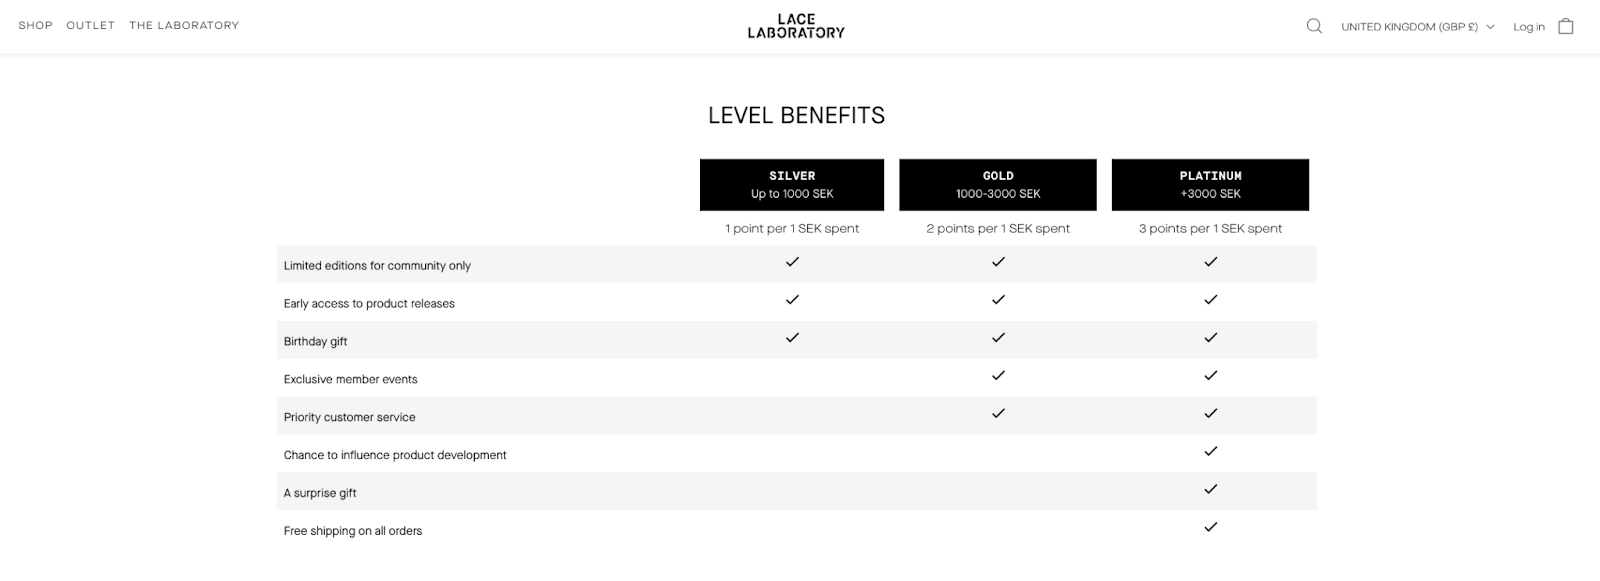 Loyalty program - Lace Laboratory